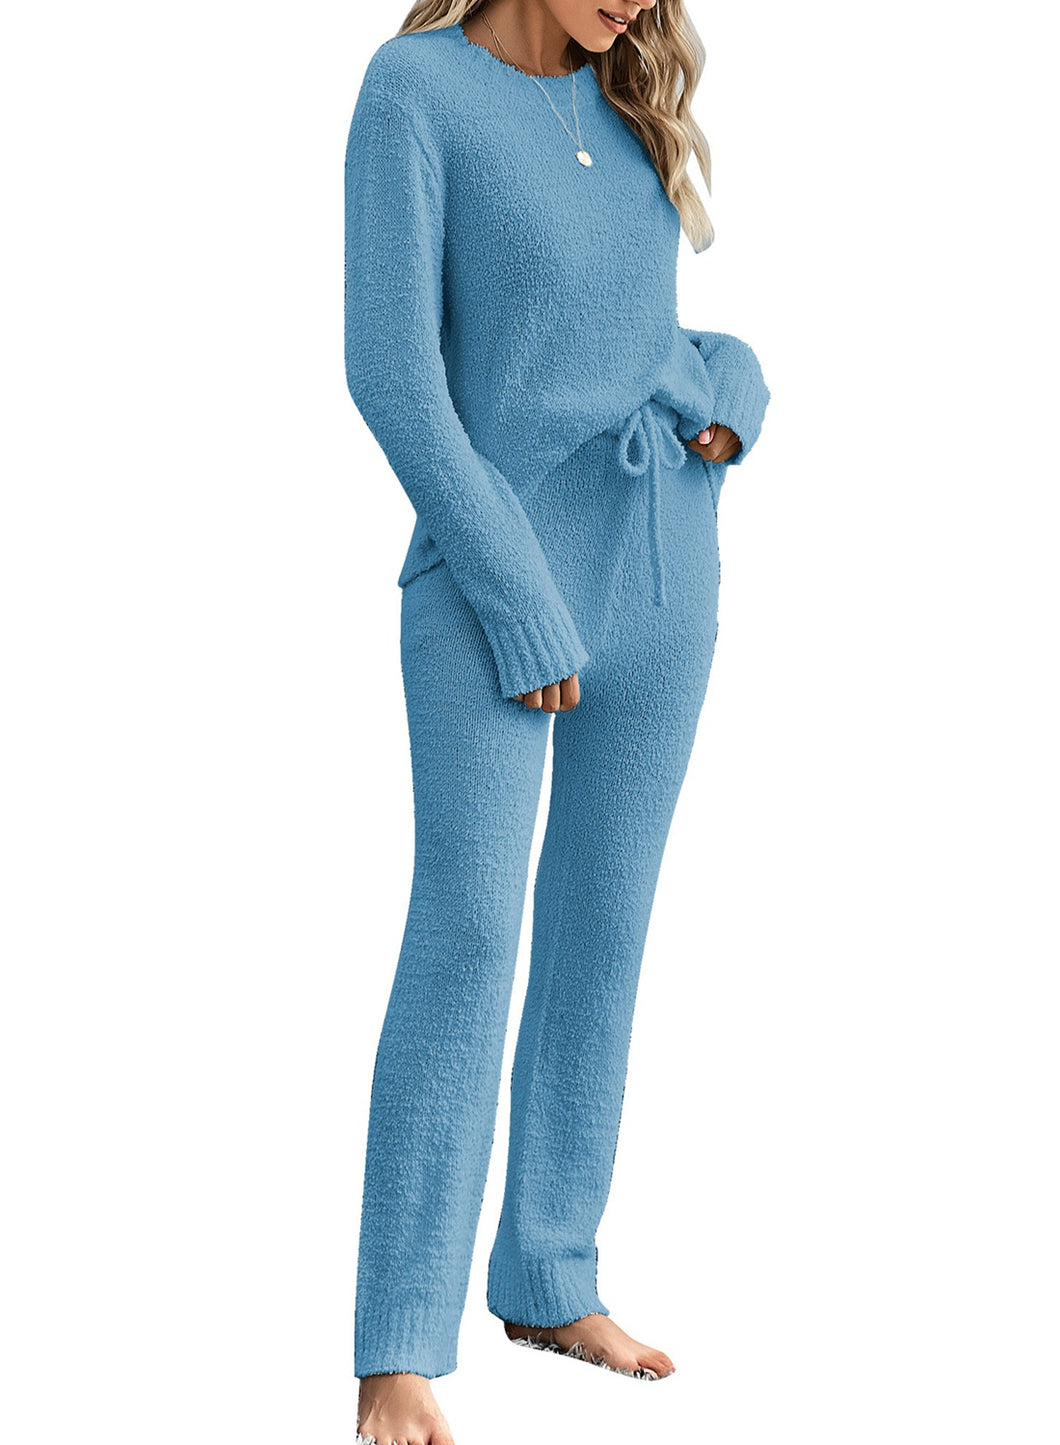 luvamia Women's Casual Pajama Set Fuzzy Fleece Knitted Long Sleeve Pj  Loungewear